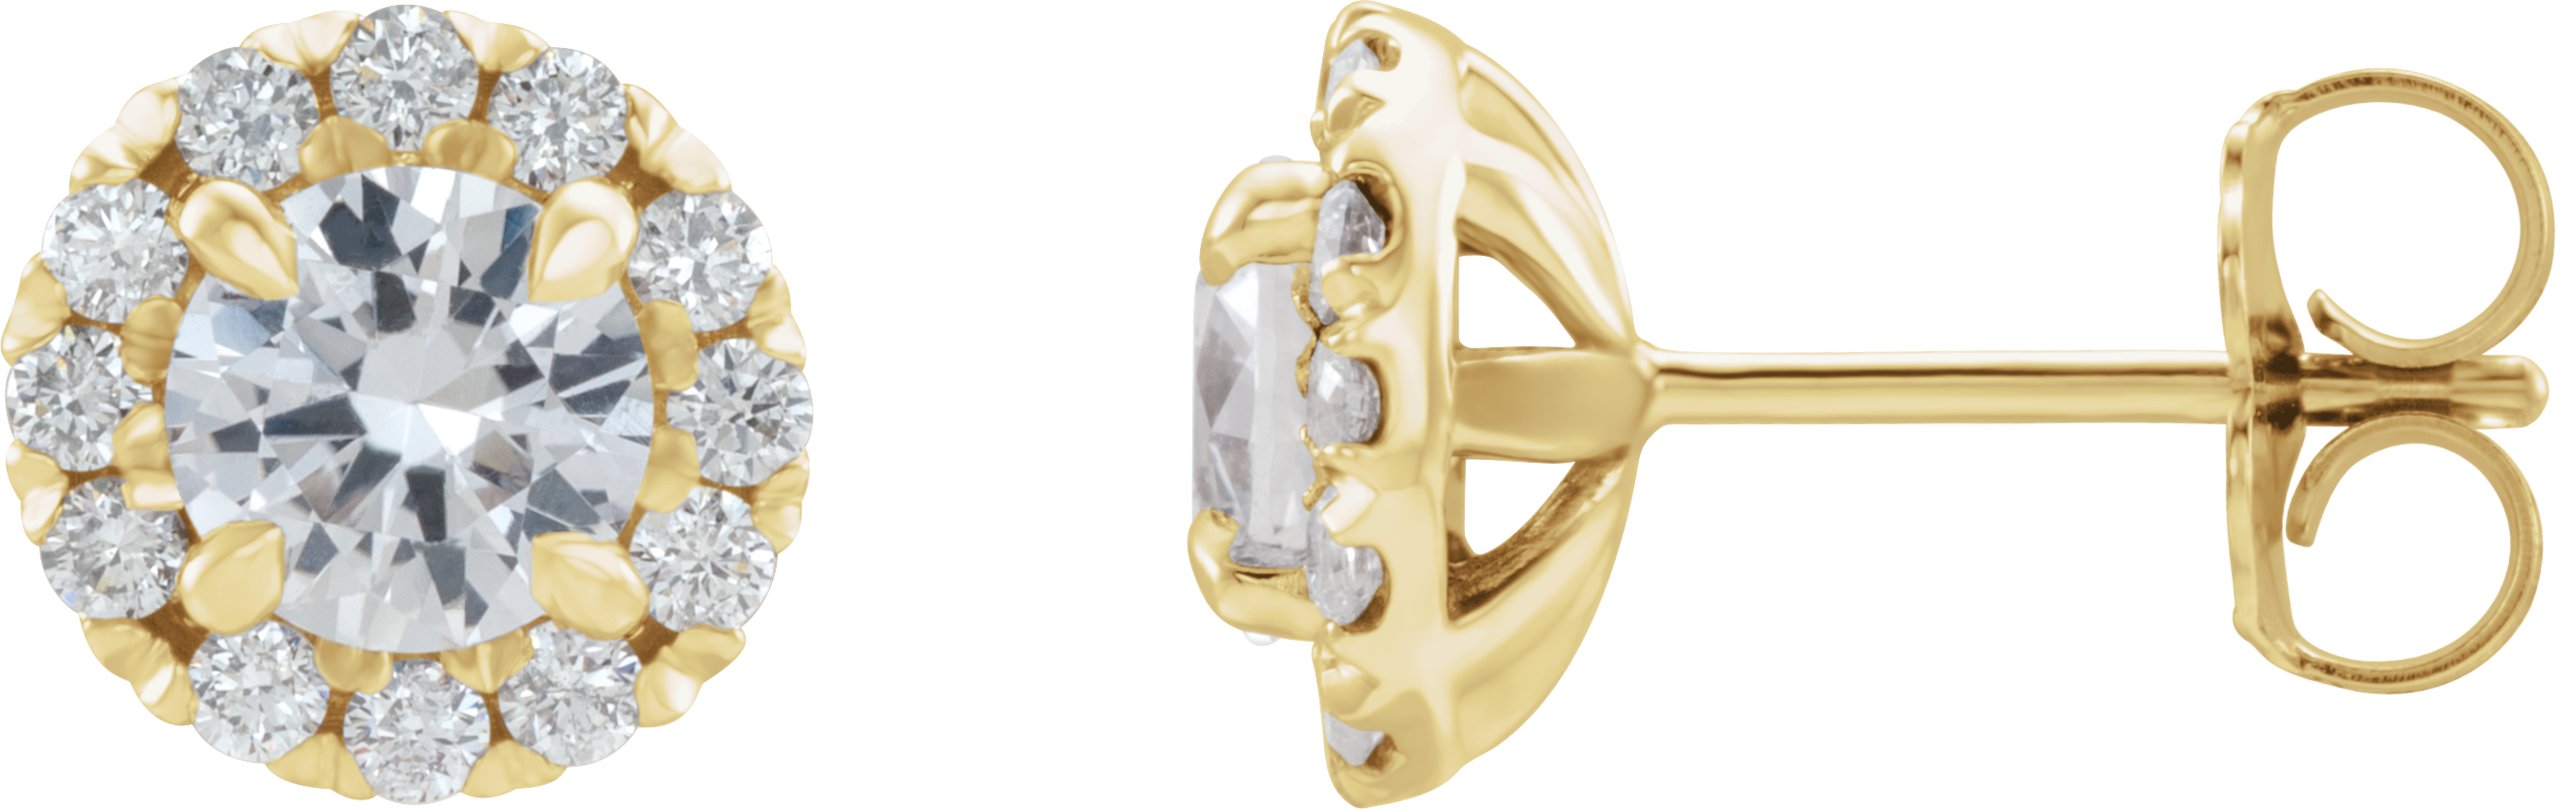 14K Yellow .75 CTW Diamond Halo Style Earrings Ref 16042314